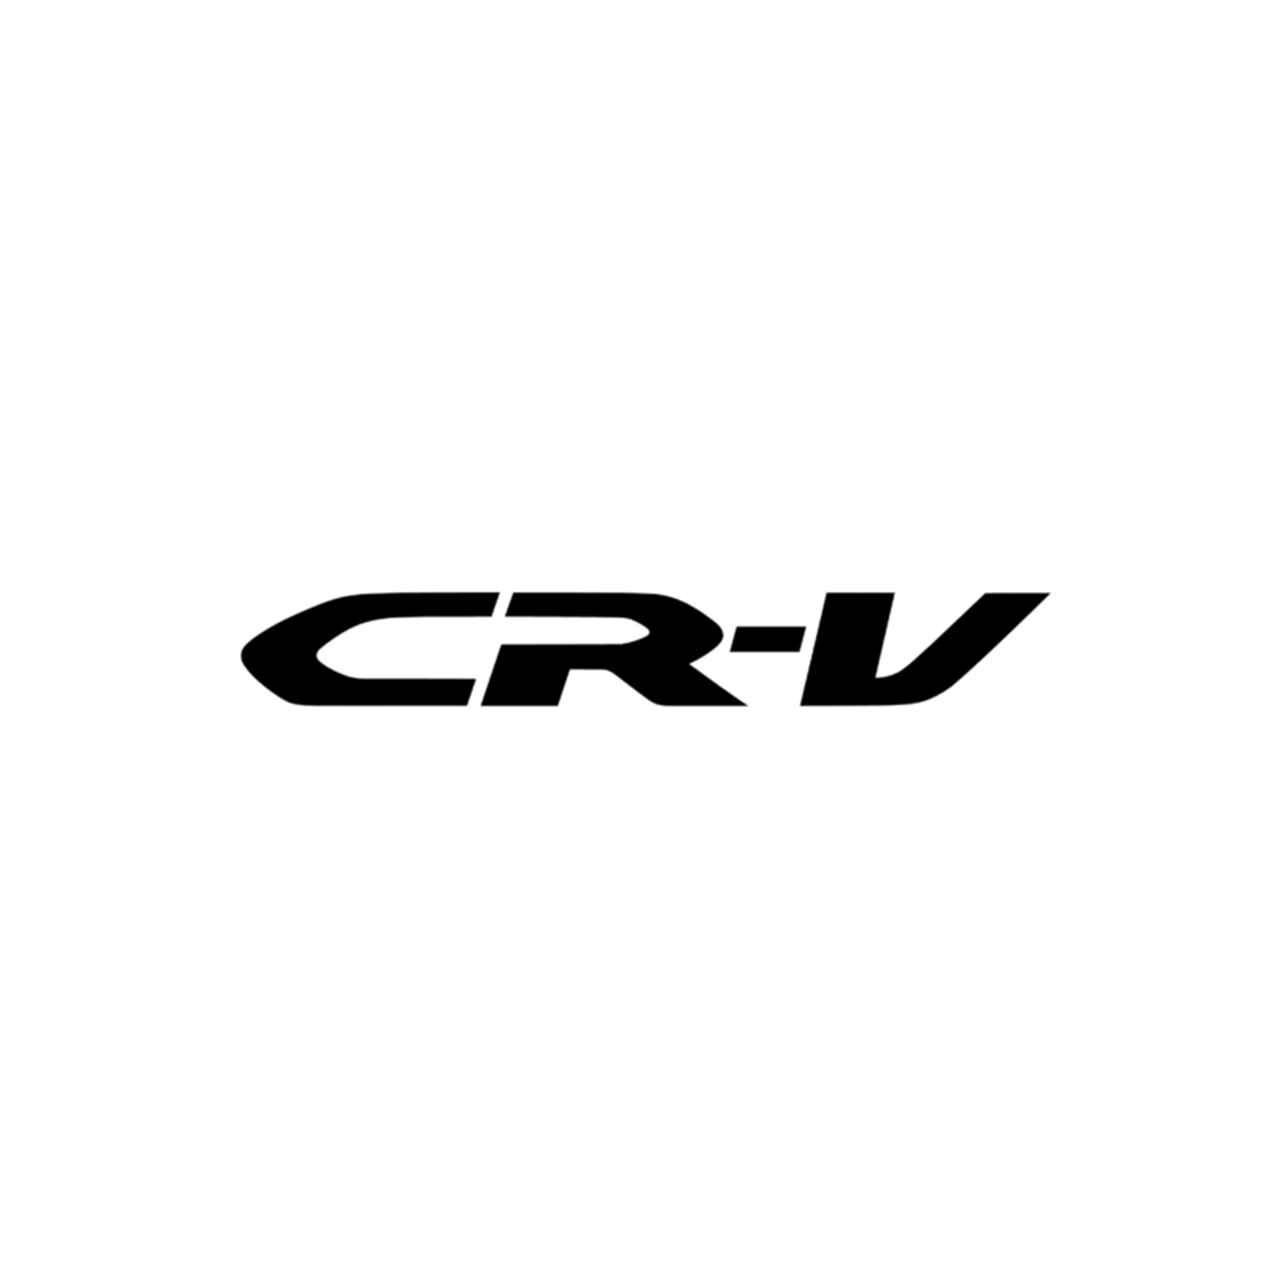 Honda CR-V Logo - Honda Cr V Ecriture Vinyl Decal BallzBeatz . com | Aftermarket ...